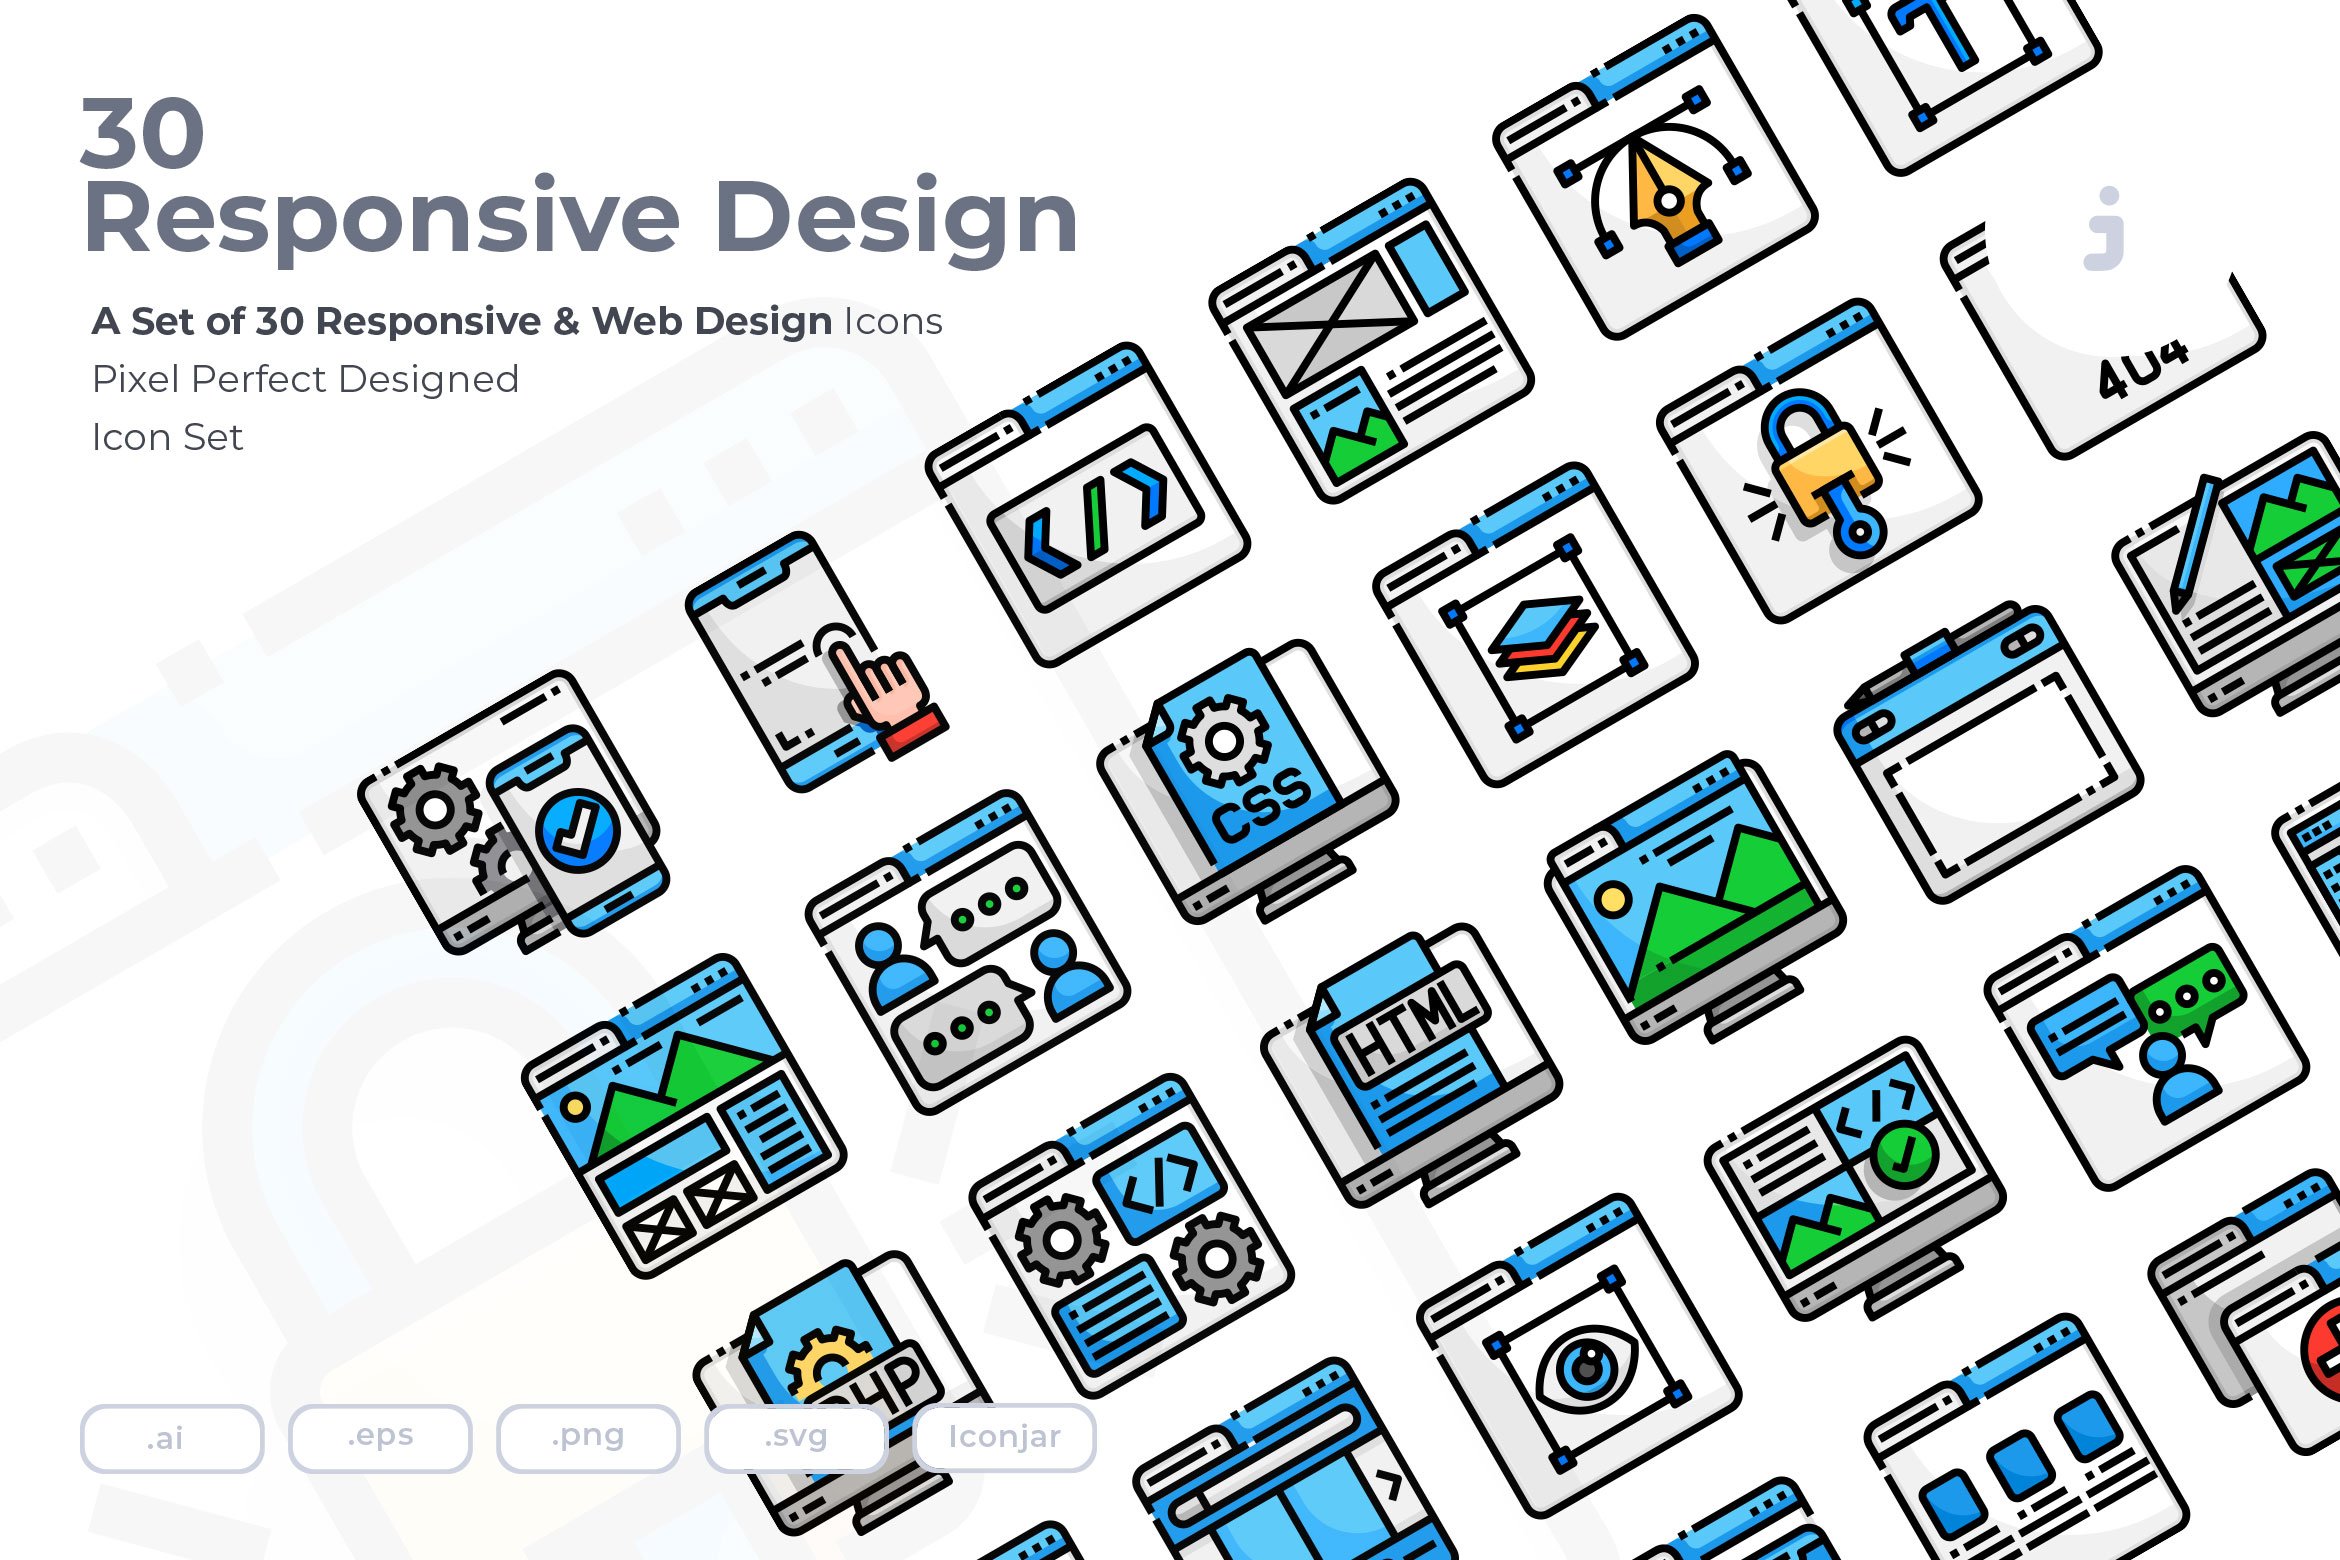 30 Responsive & Web Design Icon set cover image.